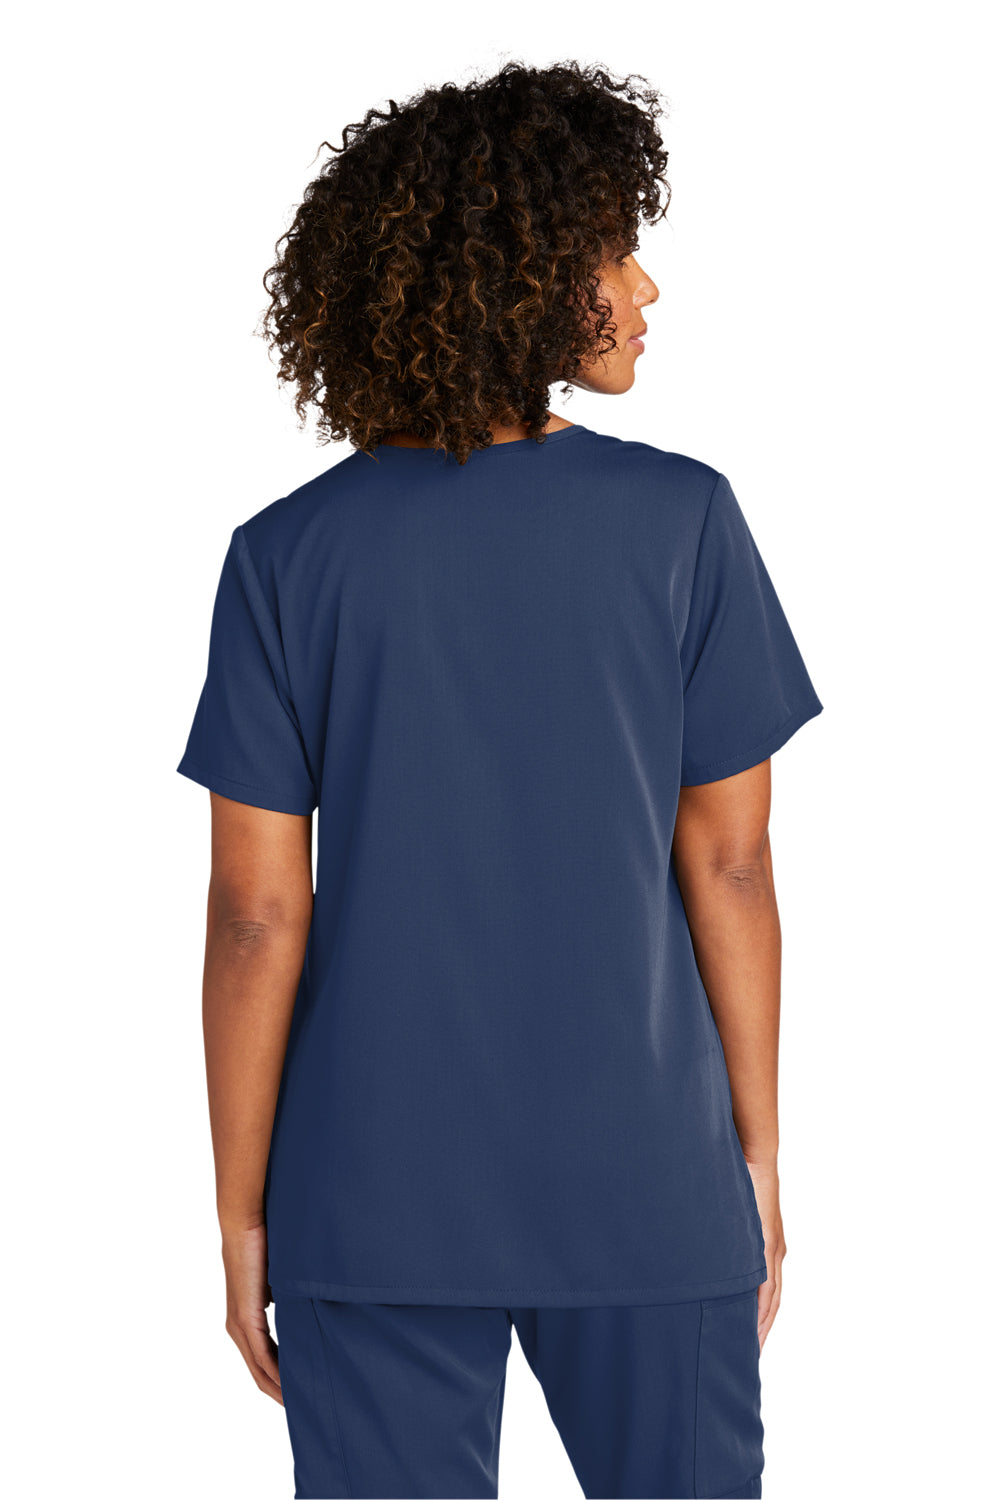 Wonderwink WW4168 Premiere Flex Short Sleeve V-Neck Shirt w/ Pockets Navy Blue Back